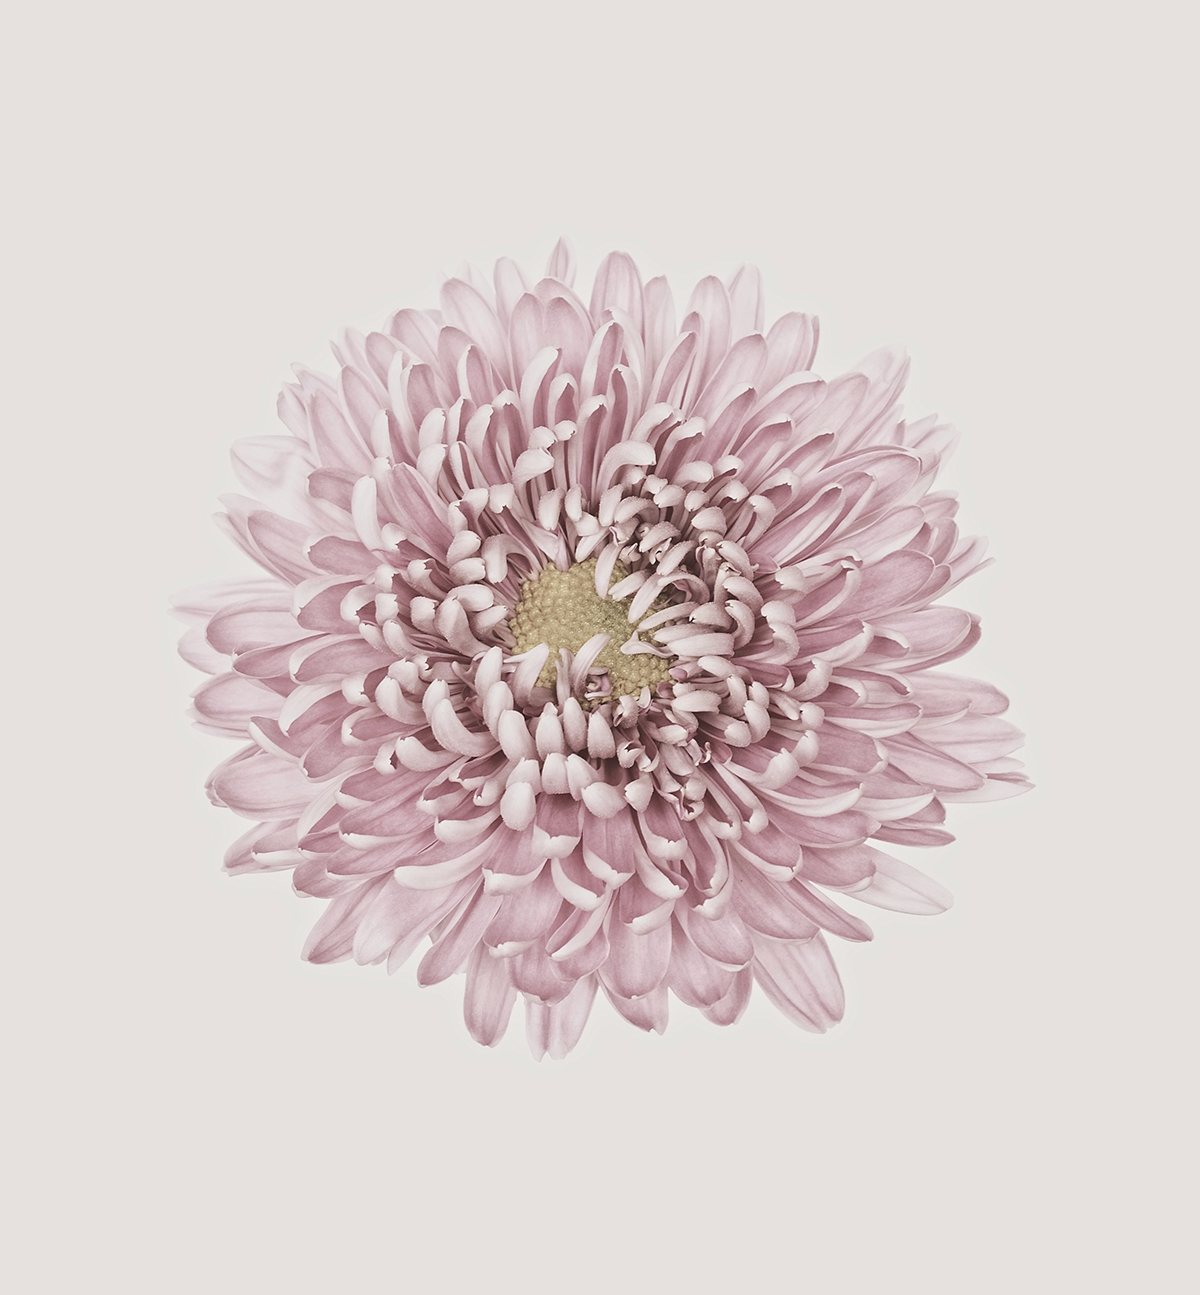 Chrysanthemum Flowers blossoms